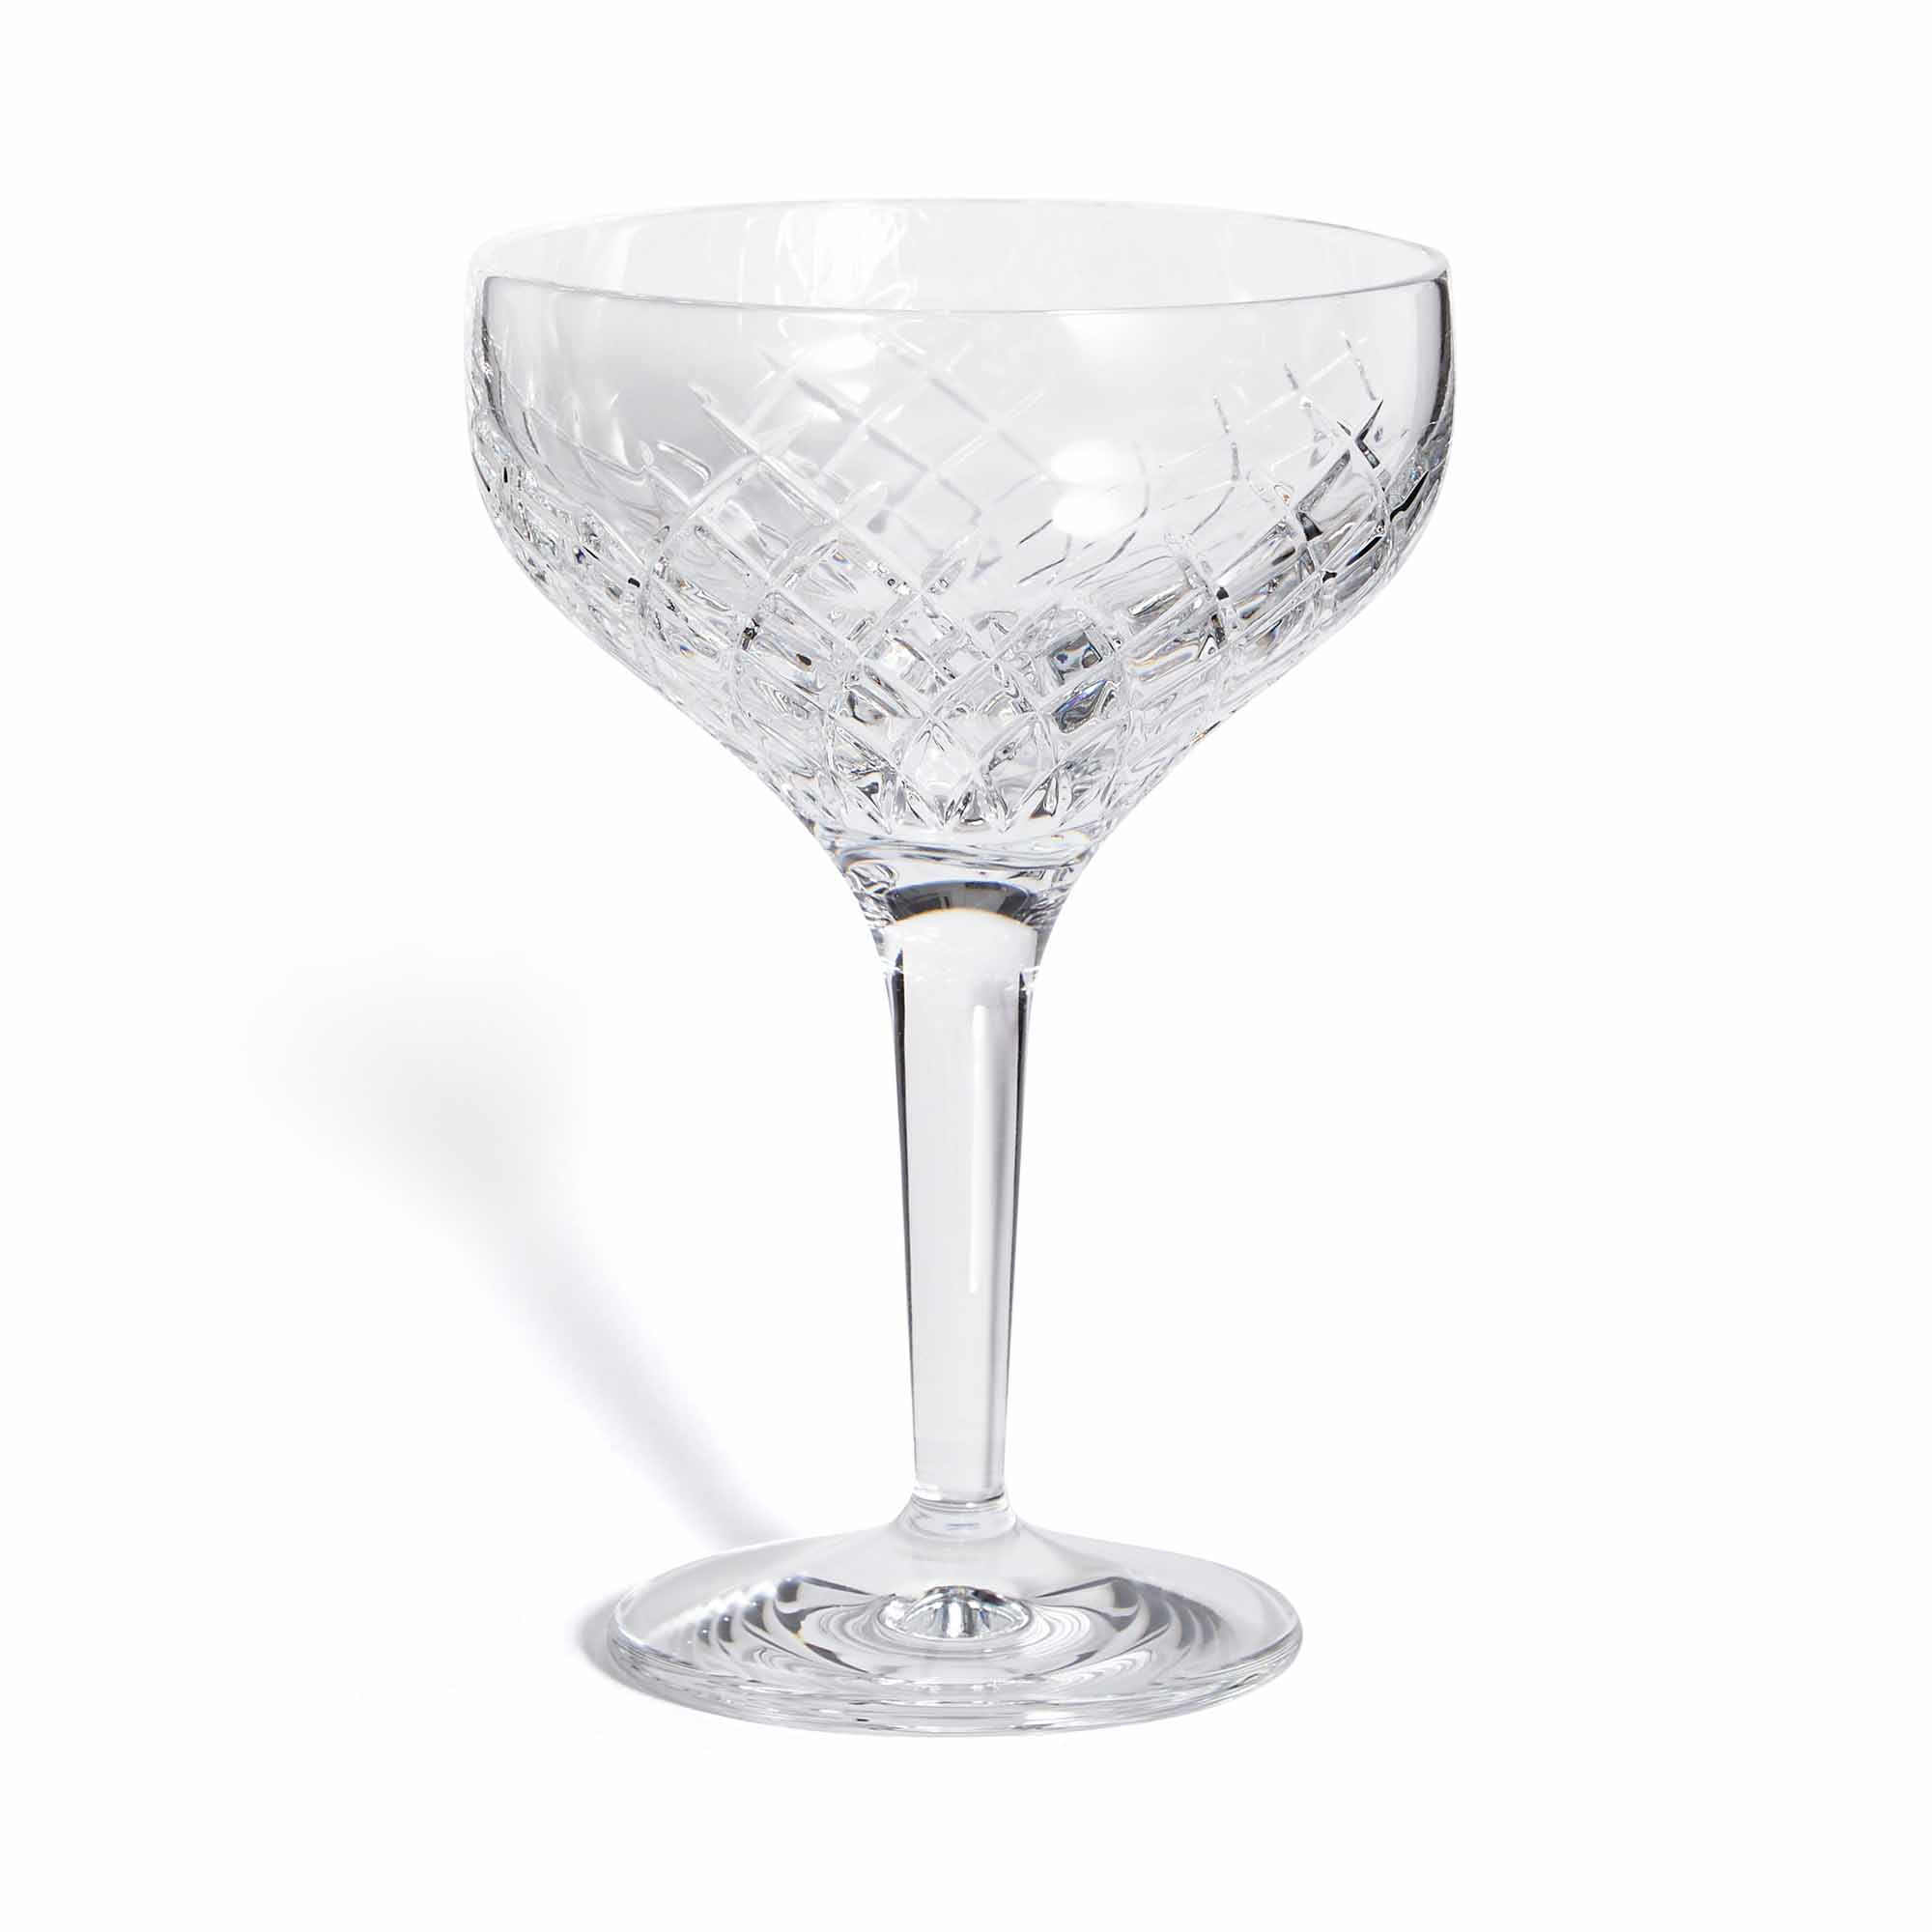 Soho home crystal coup glasses £30 each 